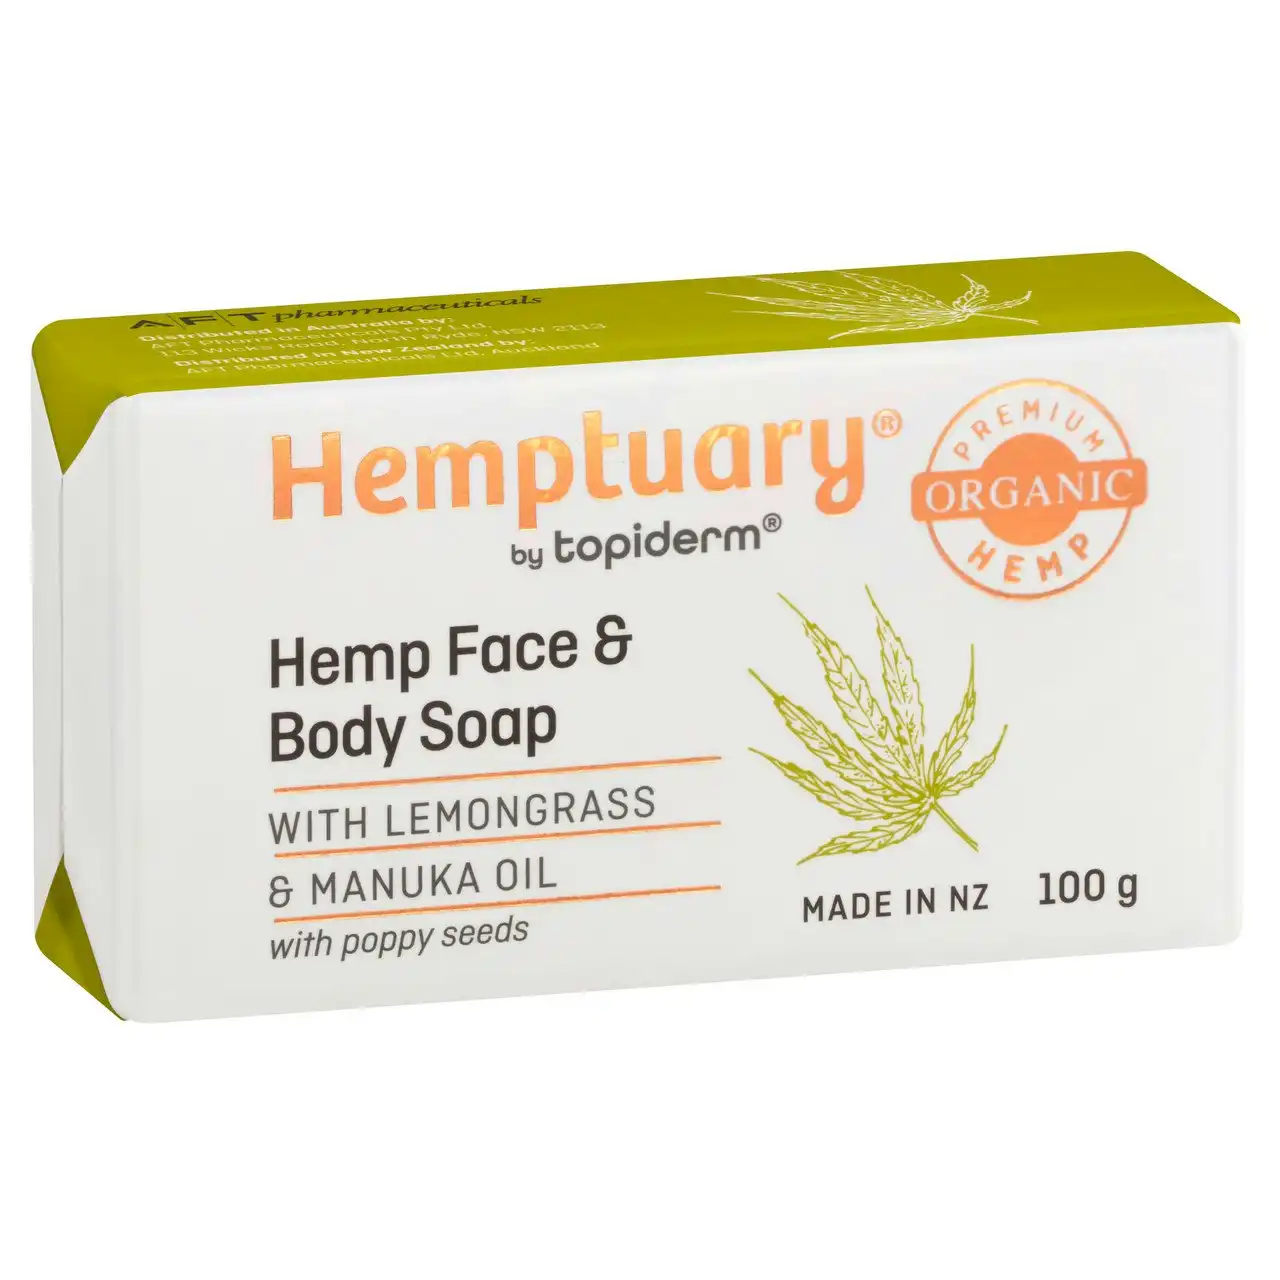 Hemptuary(R) by Topiderm(R) Hemp Face and Body Soap 100g